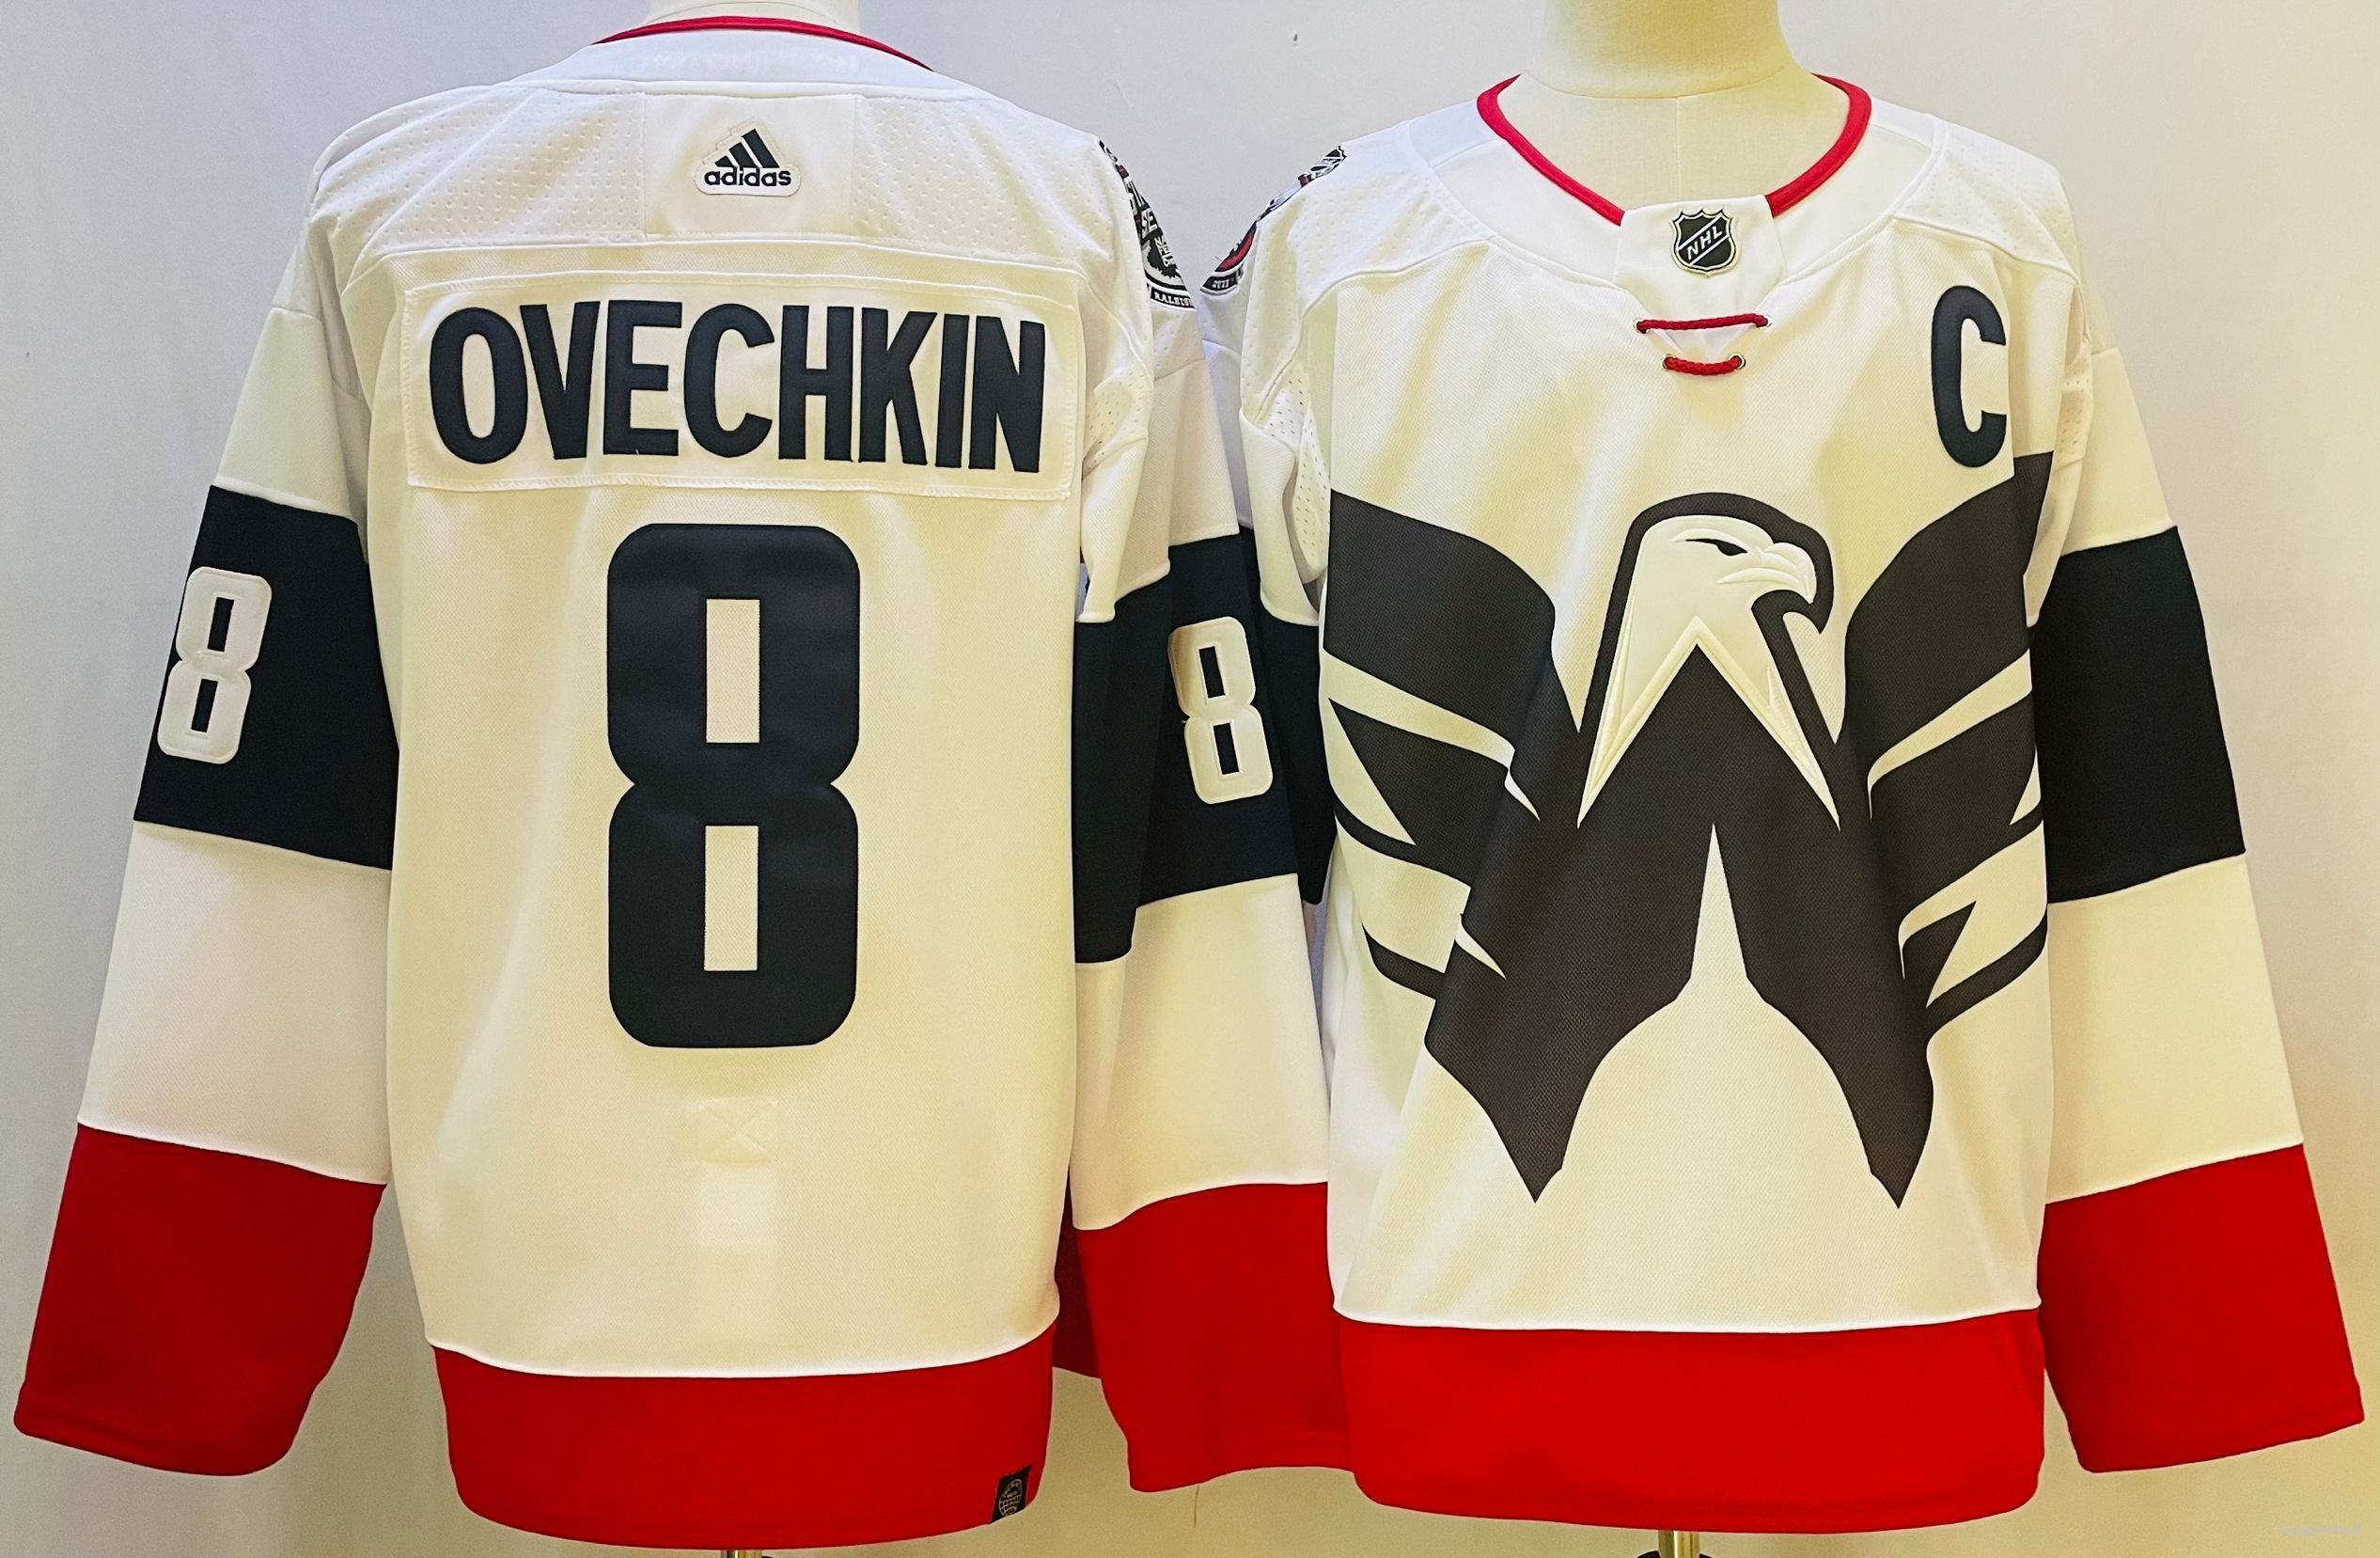 alex ovechkin hockey jersey